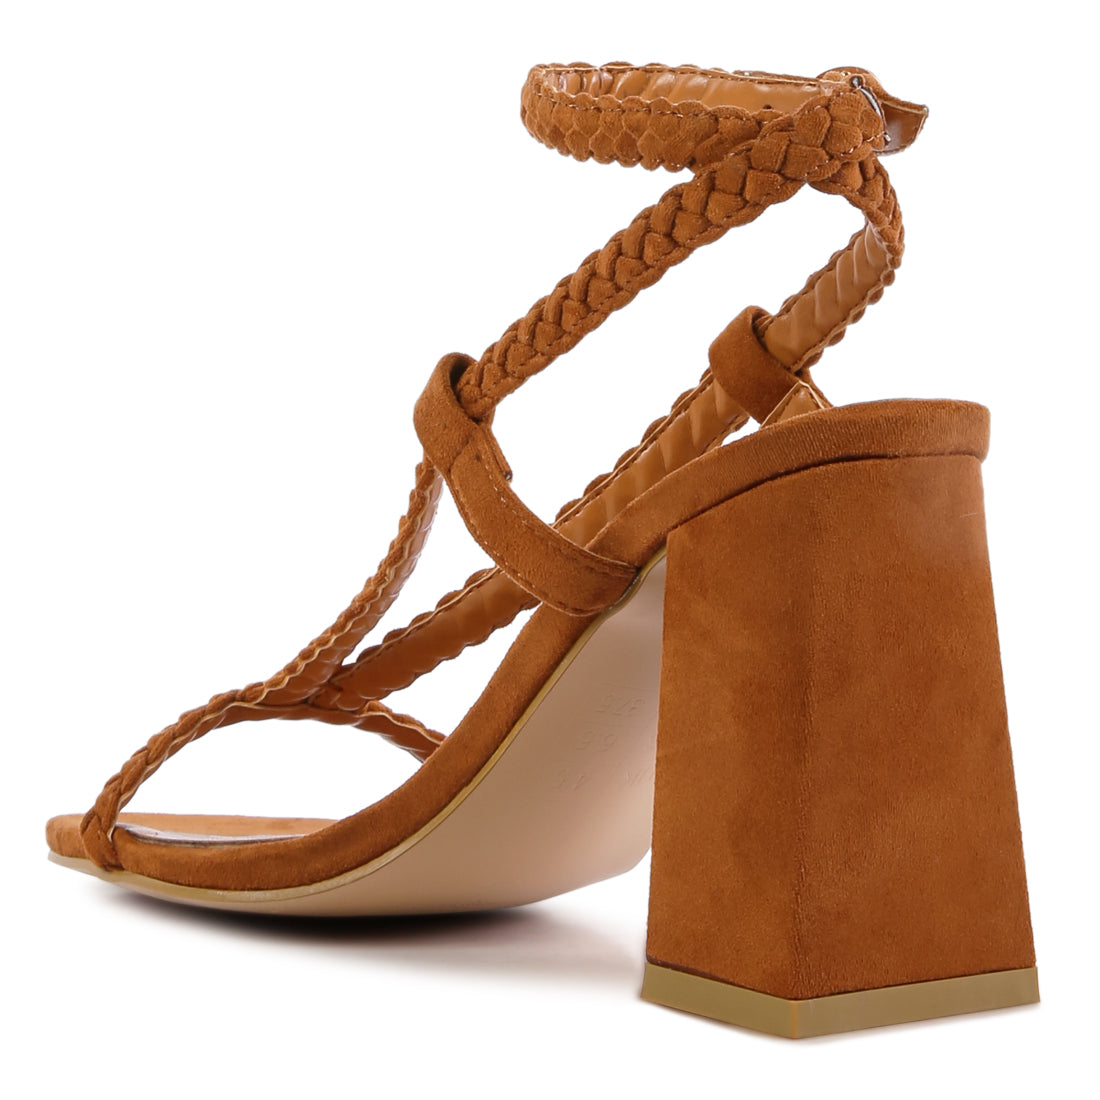 Smoosh Braided Block Heel Sandals in Tan